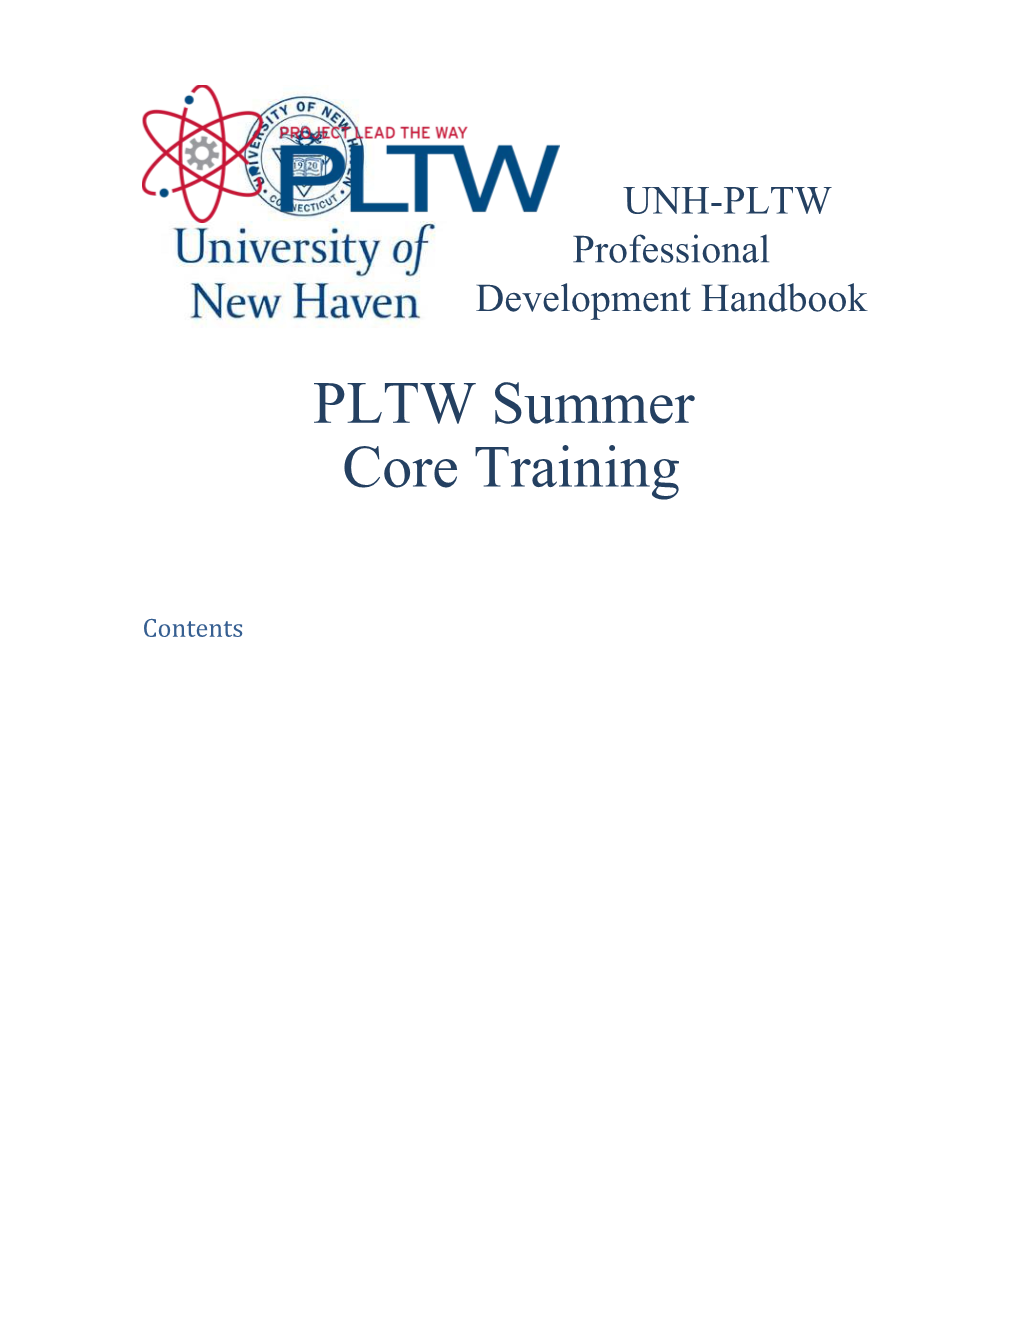 UNH-PLTW Professional Development Handbook